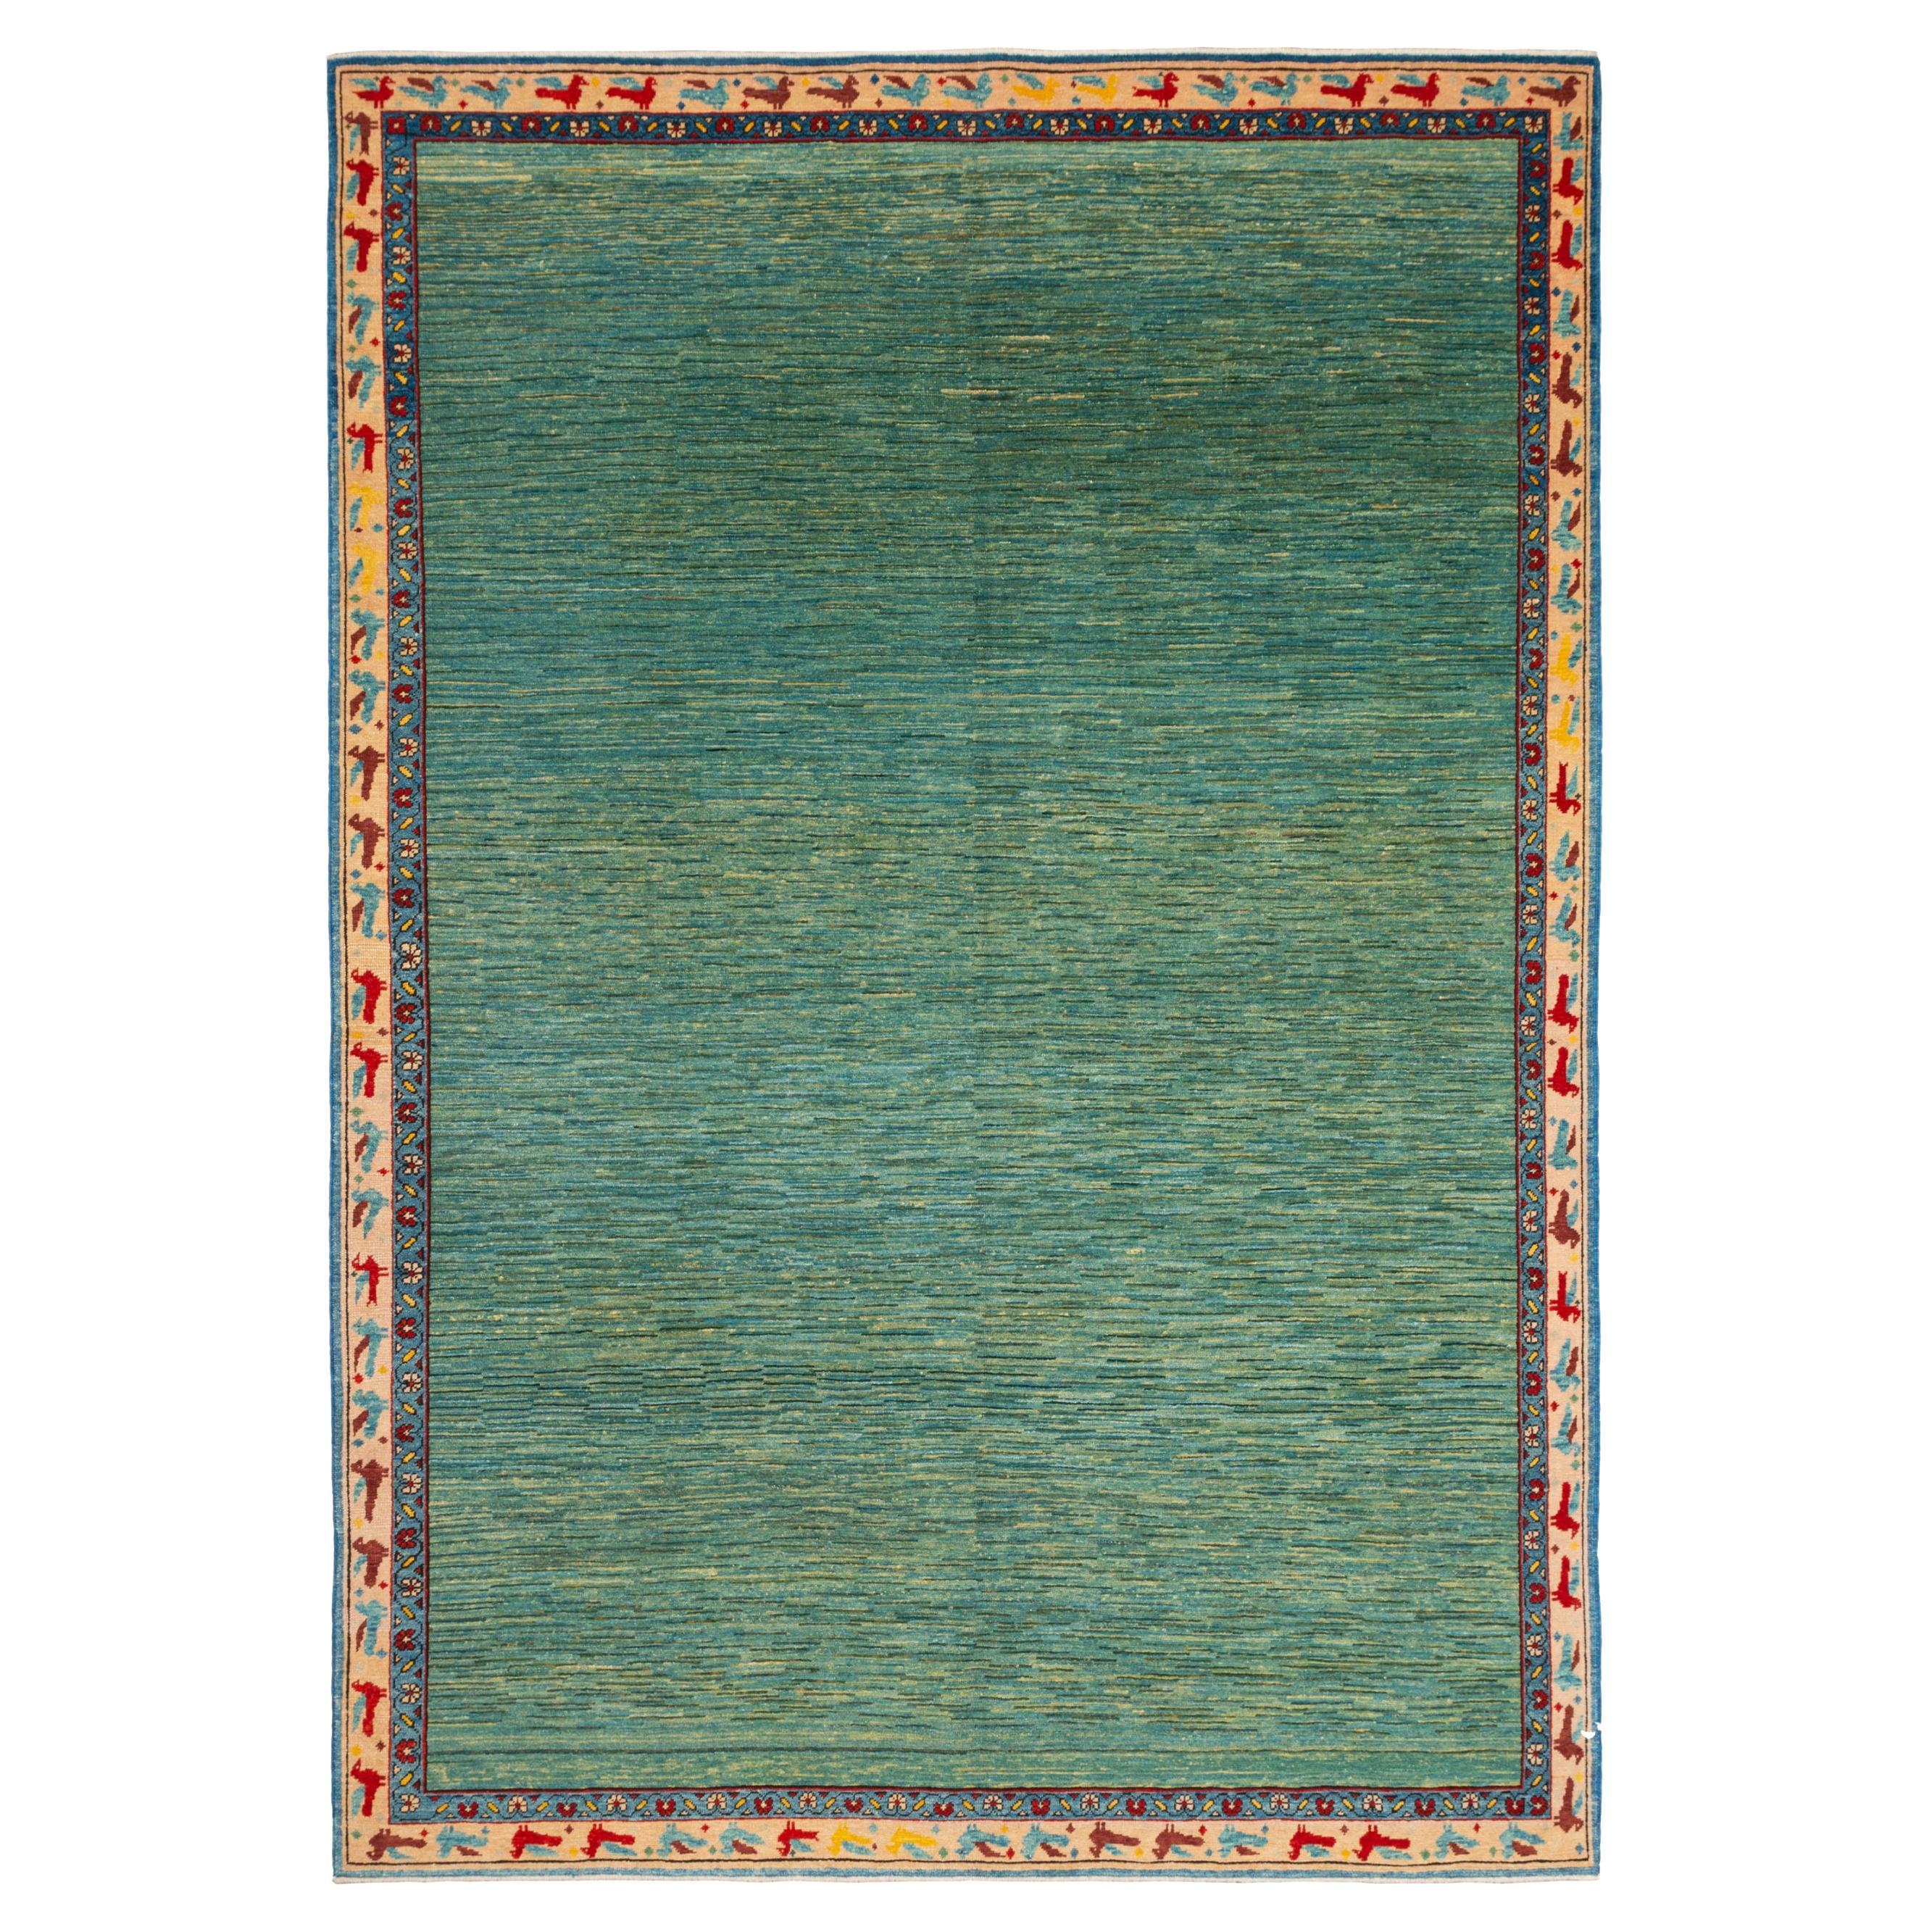 Ararat Rugs the Green Color Rug, Modern Impressionist River Carpet Natural Dyed For Sale